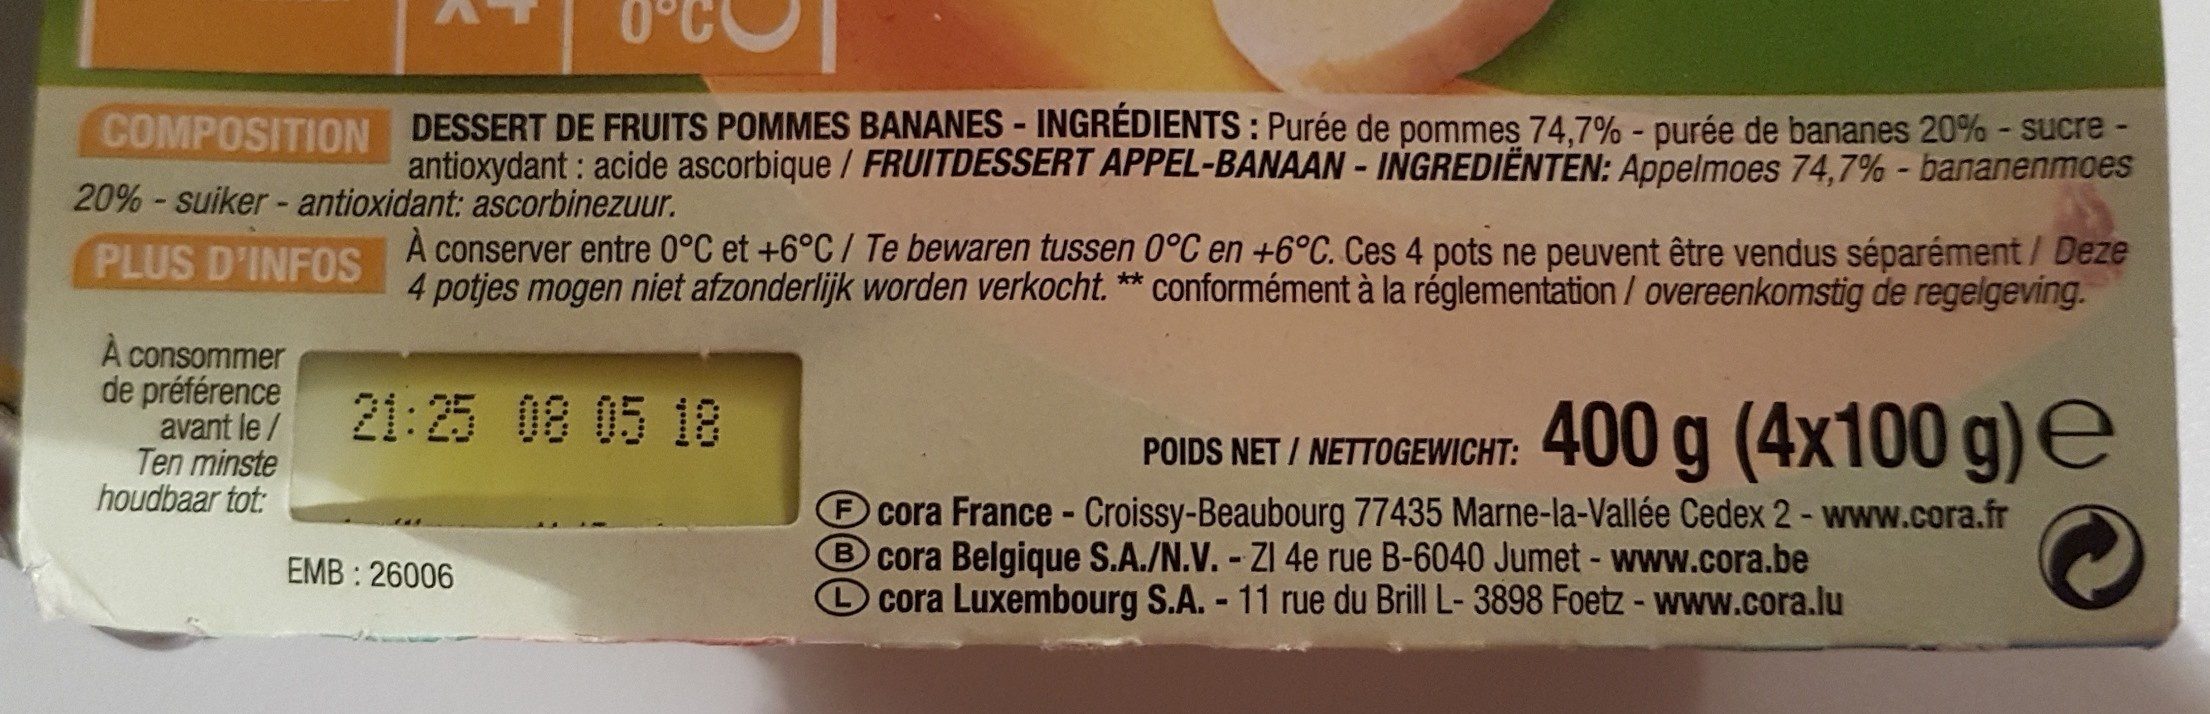 Compote pomme banane - Ingredients - fr